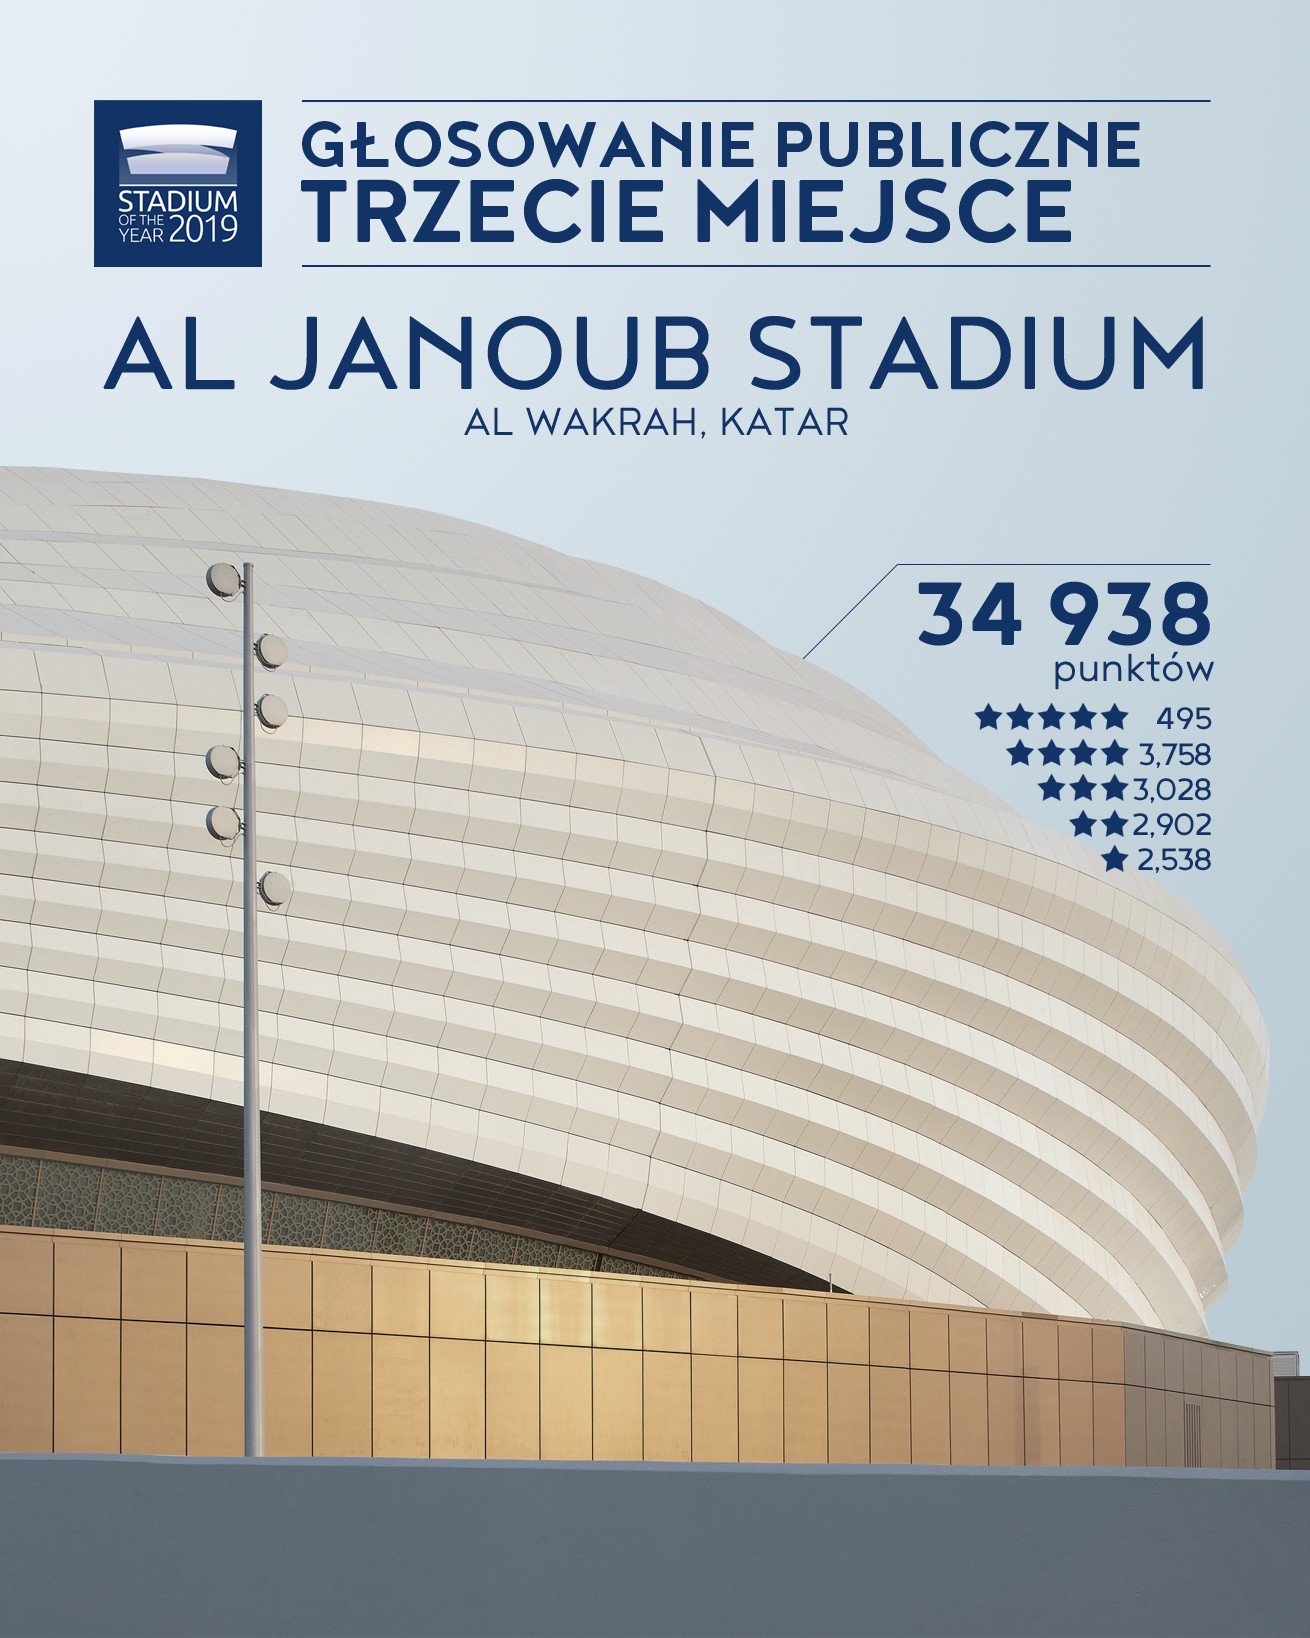 Stadium of the Year 2019